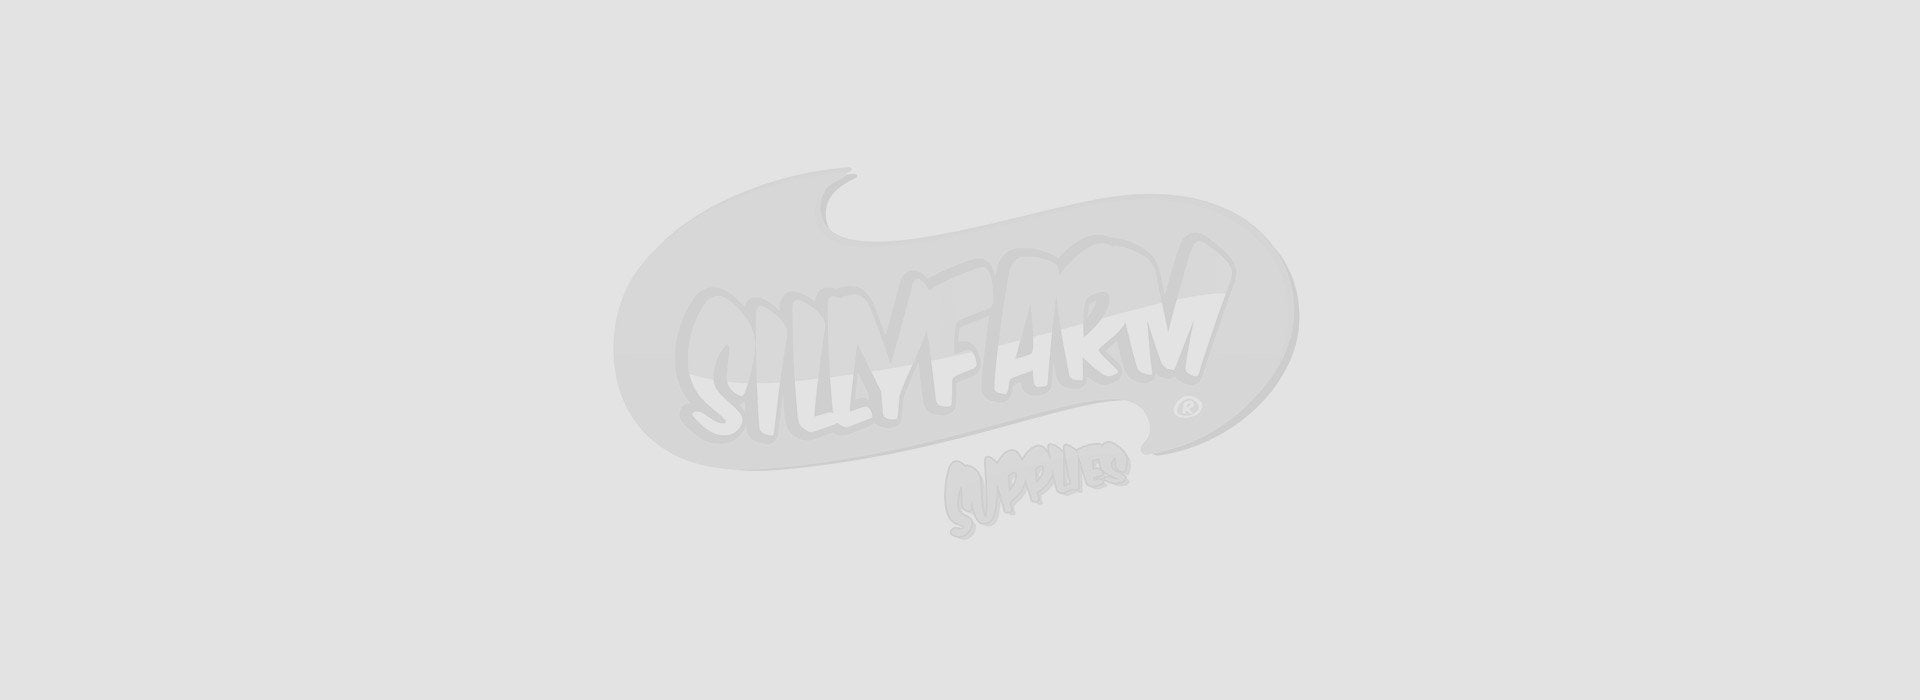 Betallic | Silly Farm Supplies